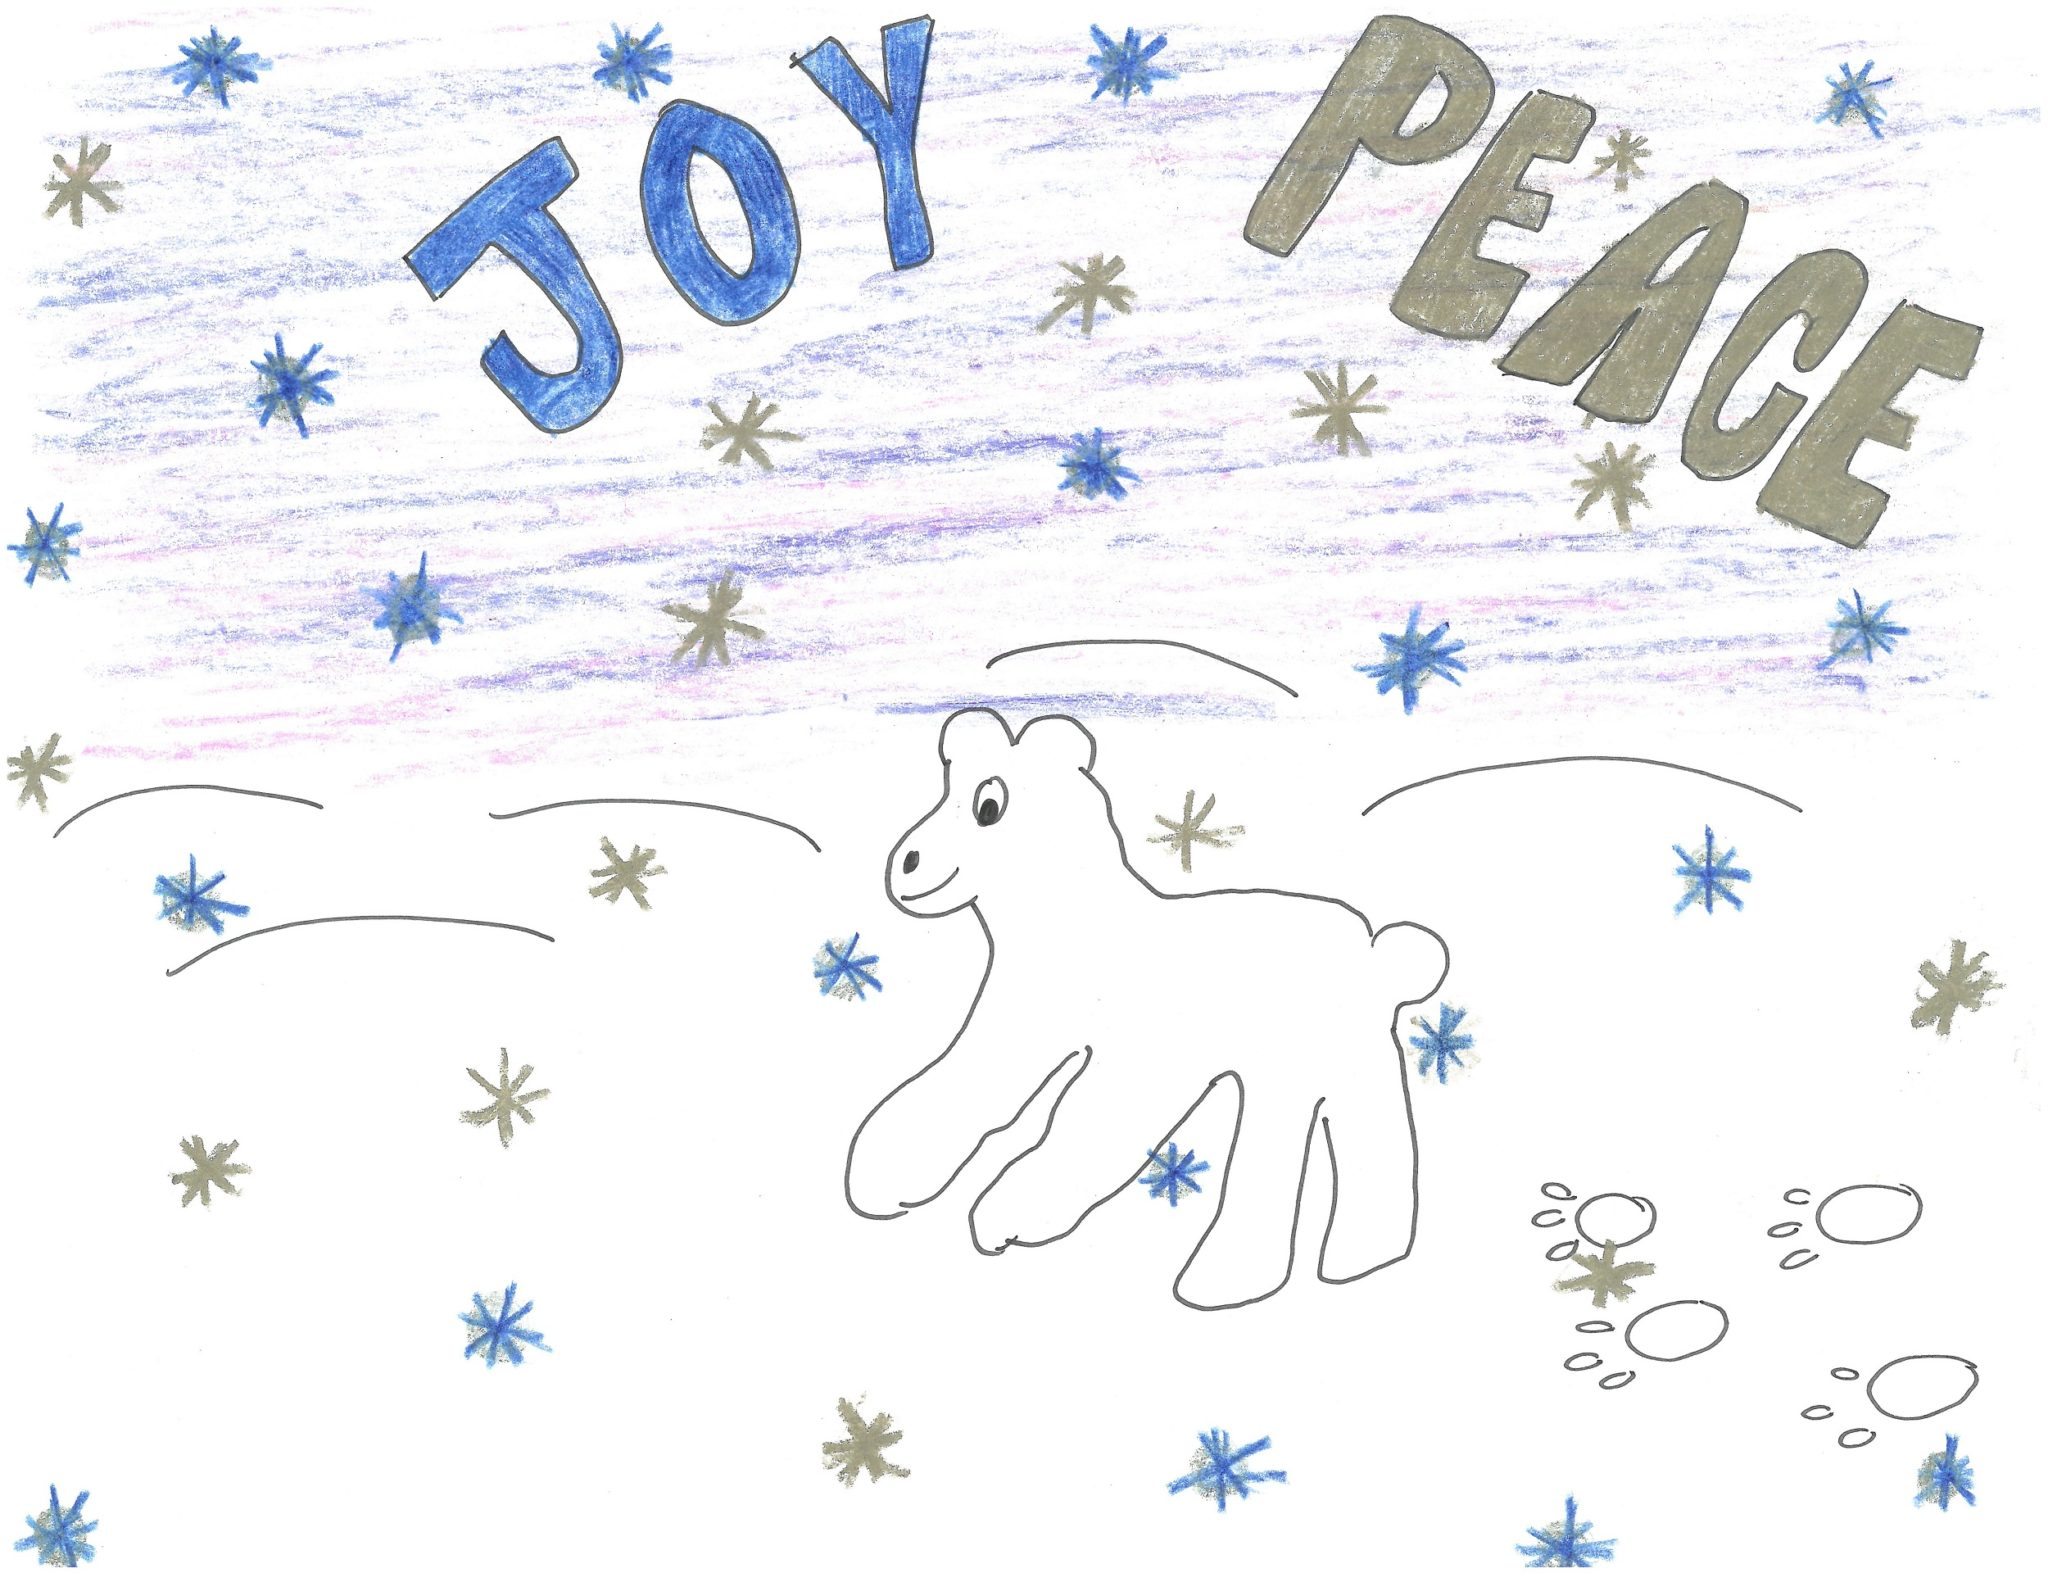 joy-and-peace